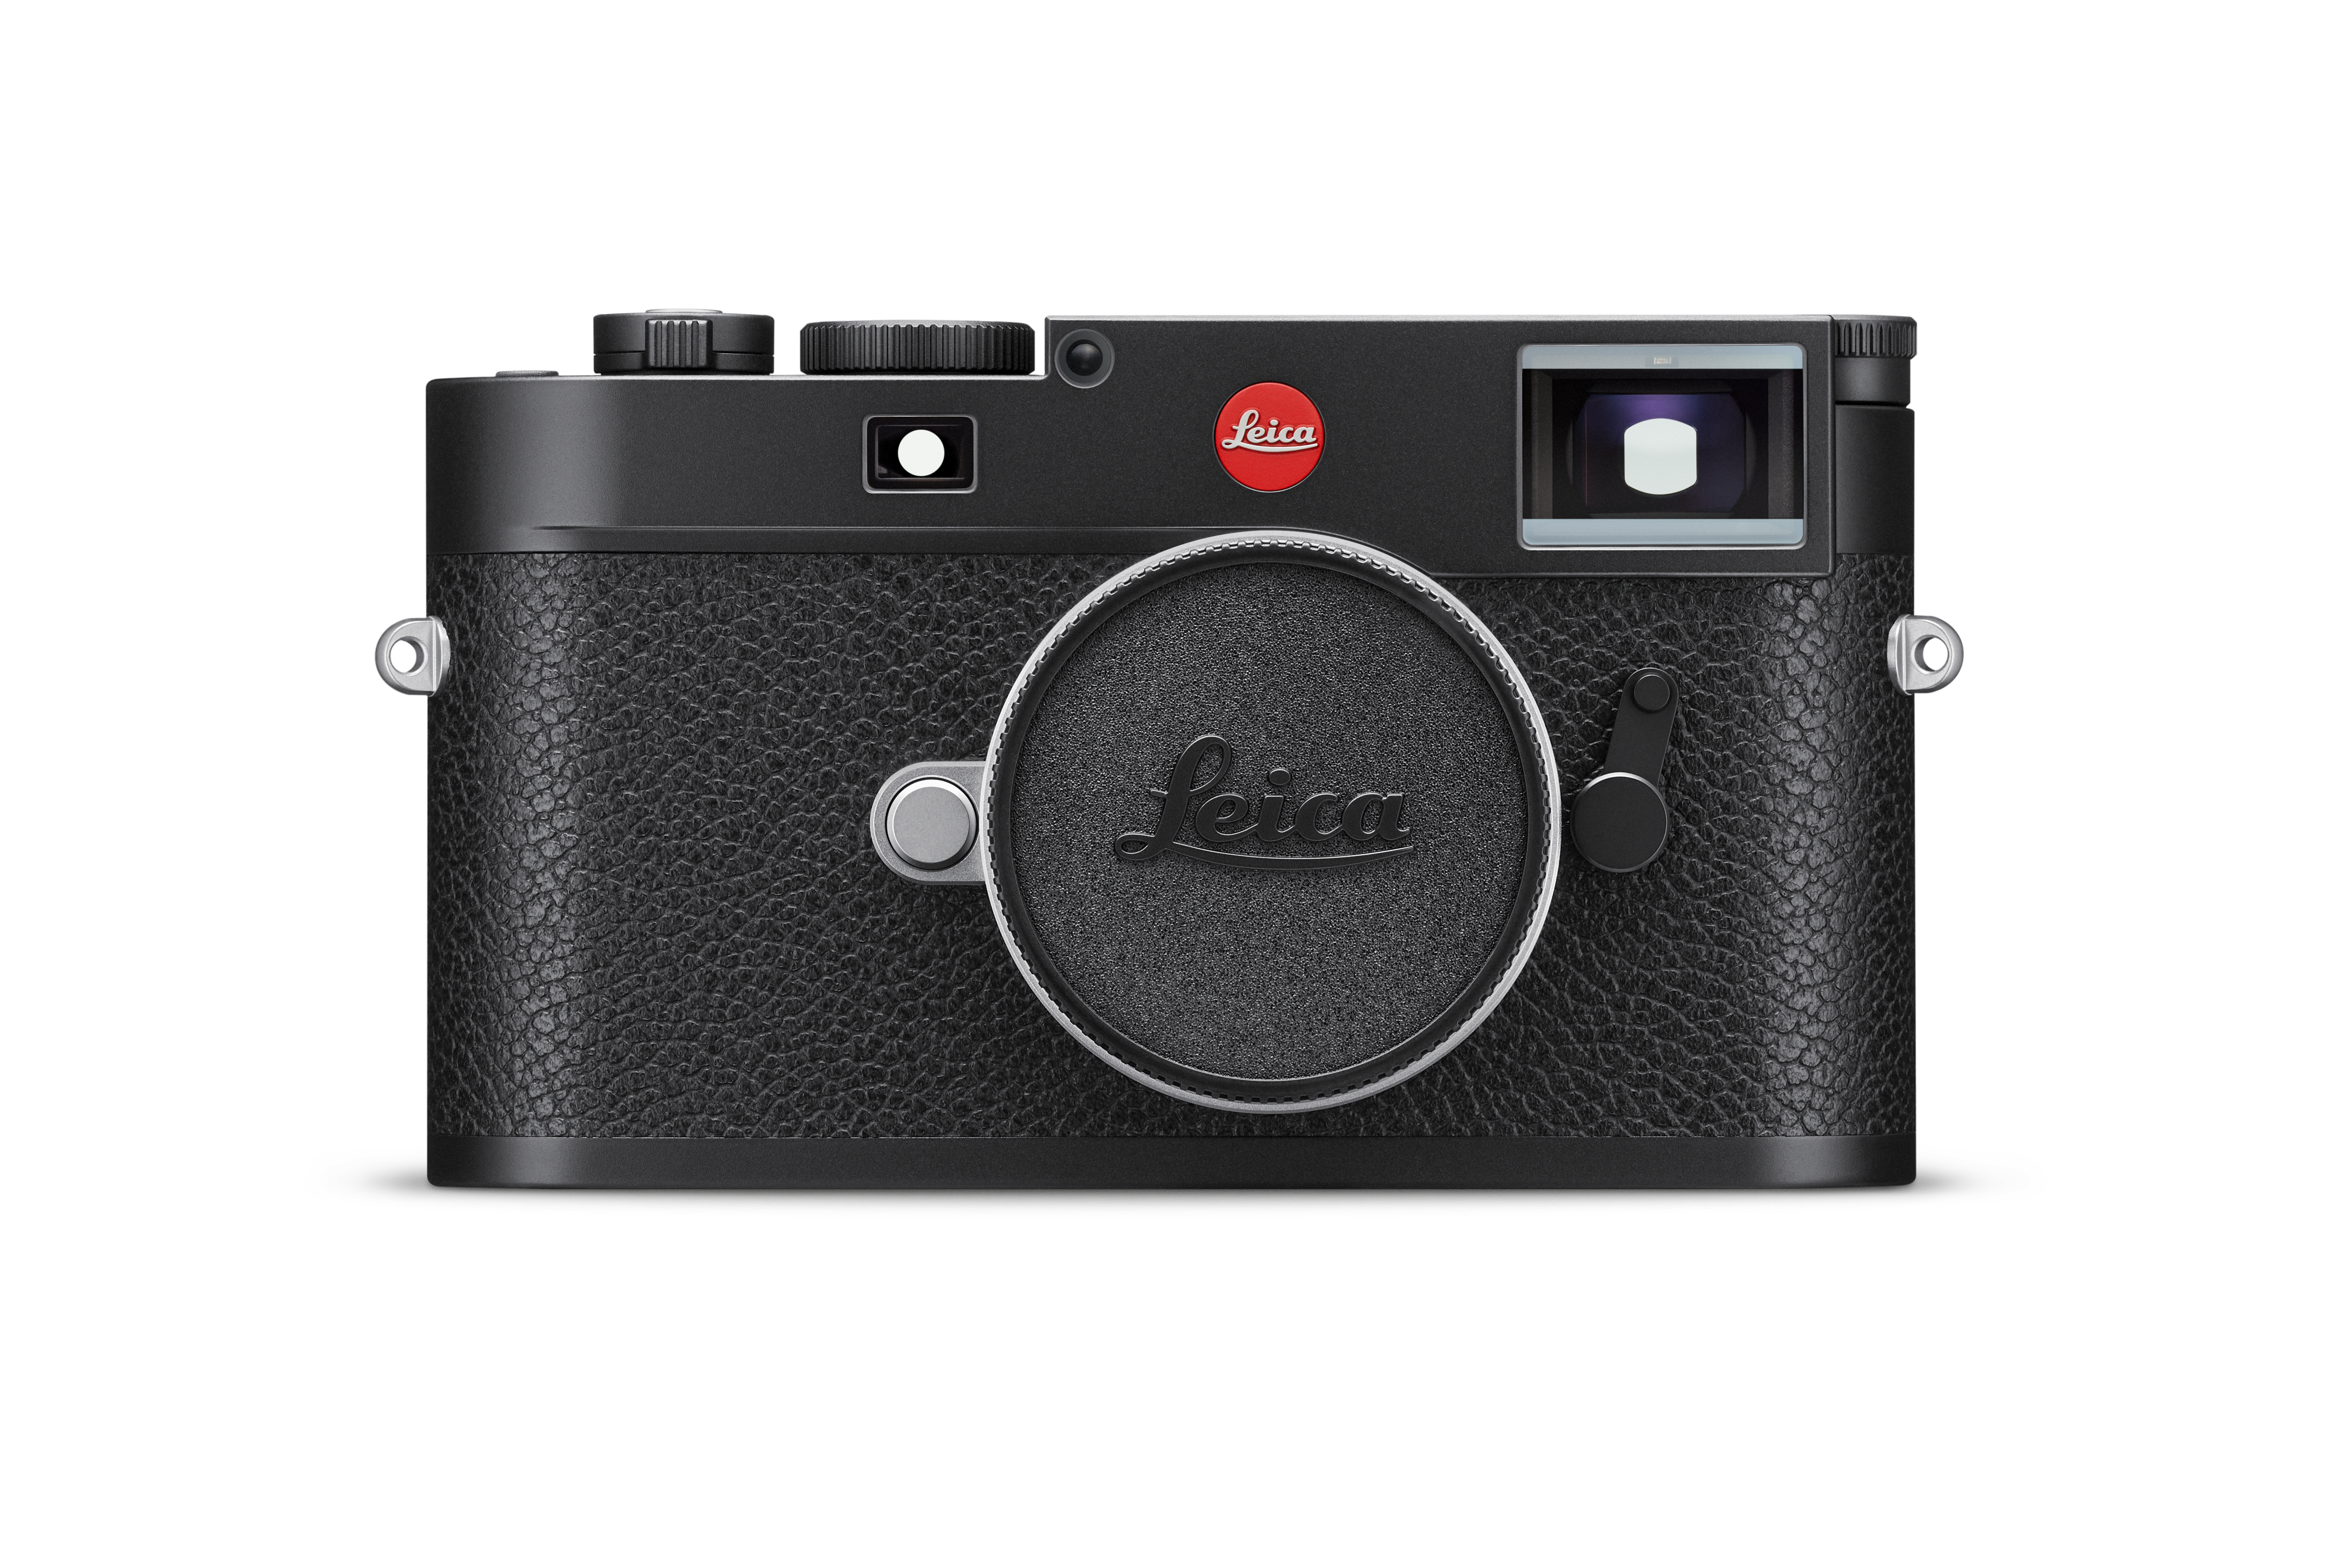 Leica M11 black